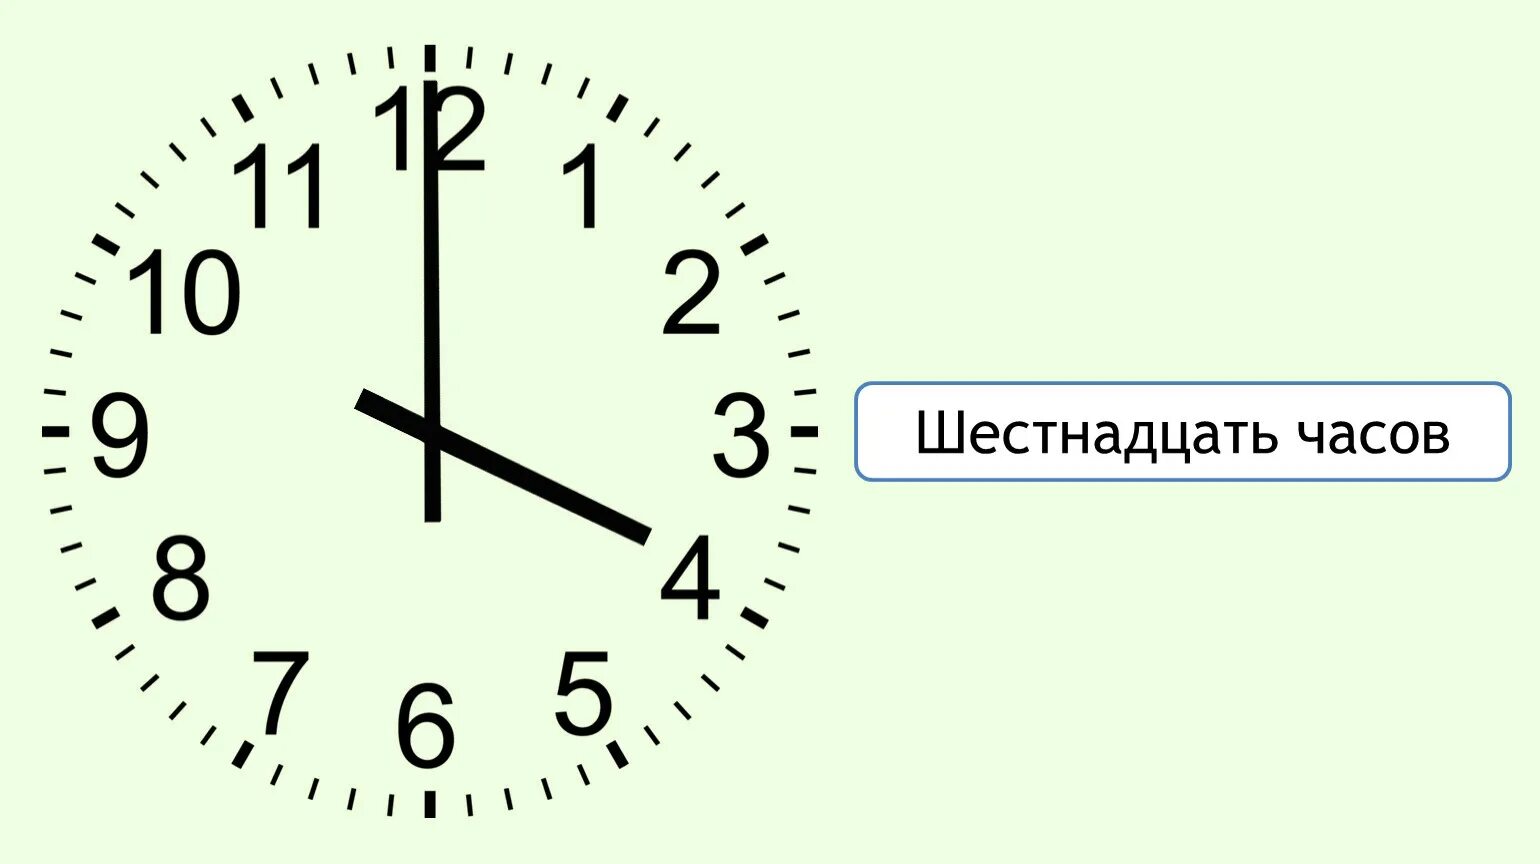 Часы 16:00. Циферблат на 16 часов. Часы показывают 4 часа. 16 Часов на часах.